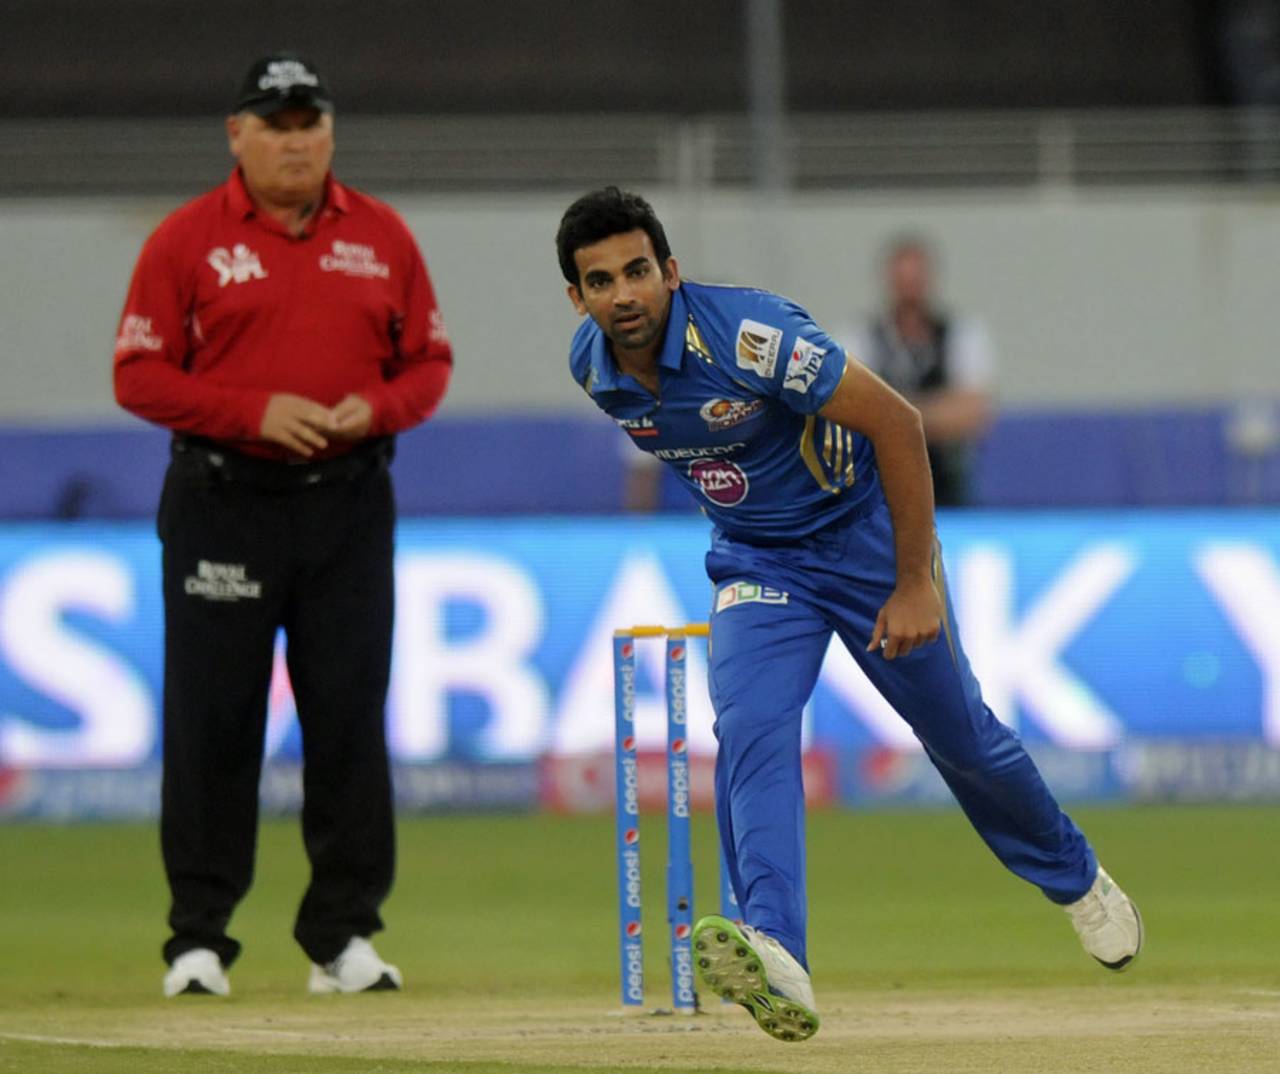 Zaheer Khan in his follow-through, Mumbai Indians v Sunrisers Hyderabad, IPL 2014, Dubai, April 30, 2014